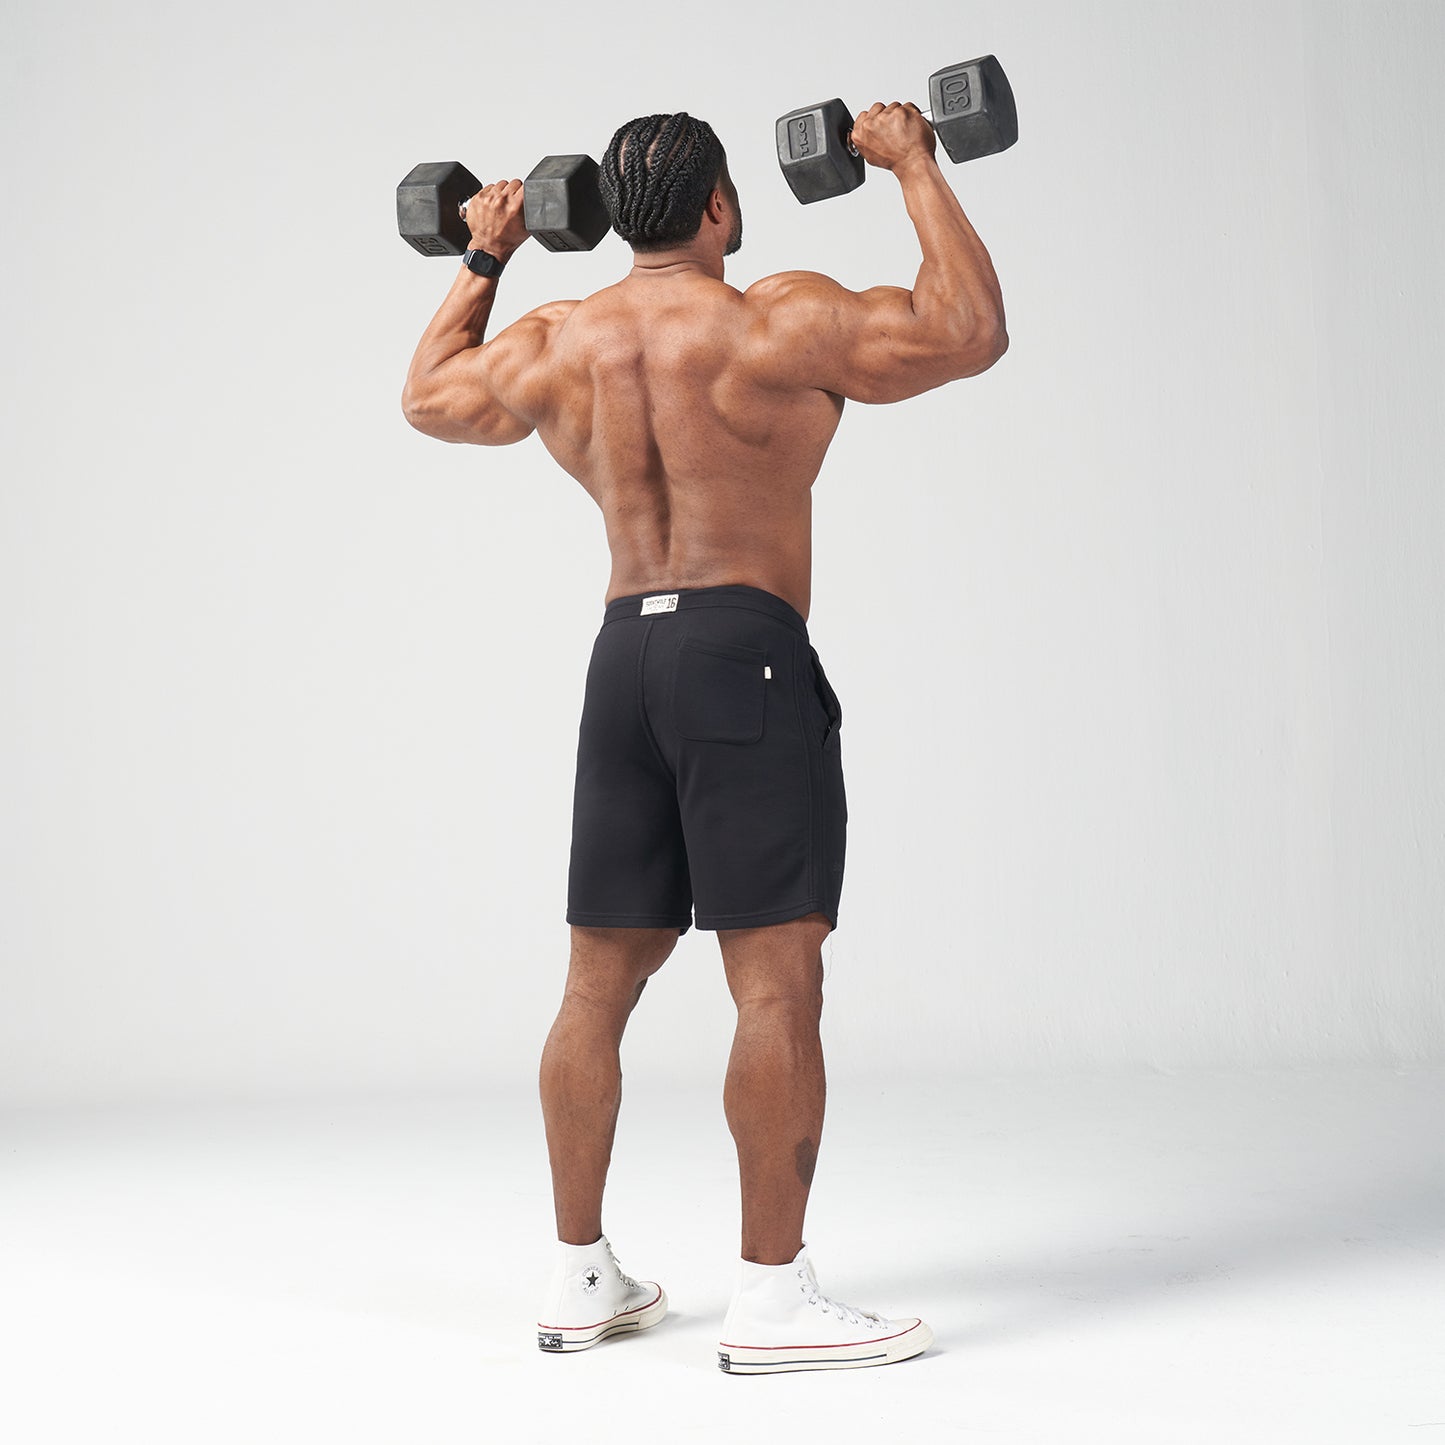 squatwolf-gym-wear-golden-era-7-inches-retro-shorts-black-workout-short-for-men